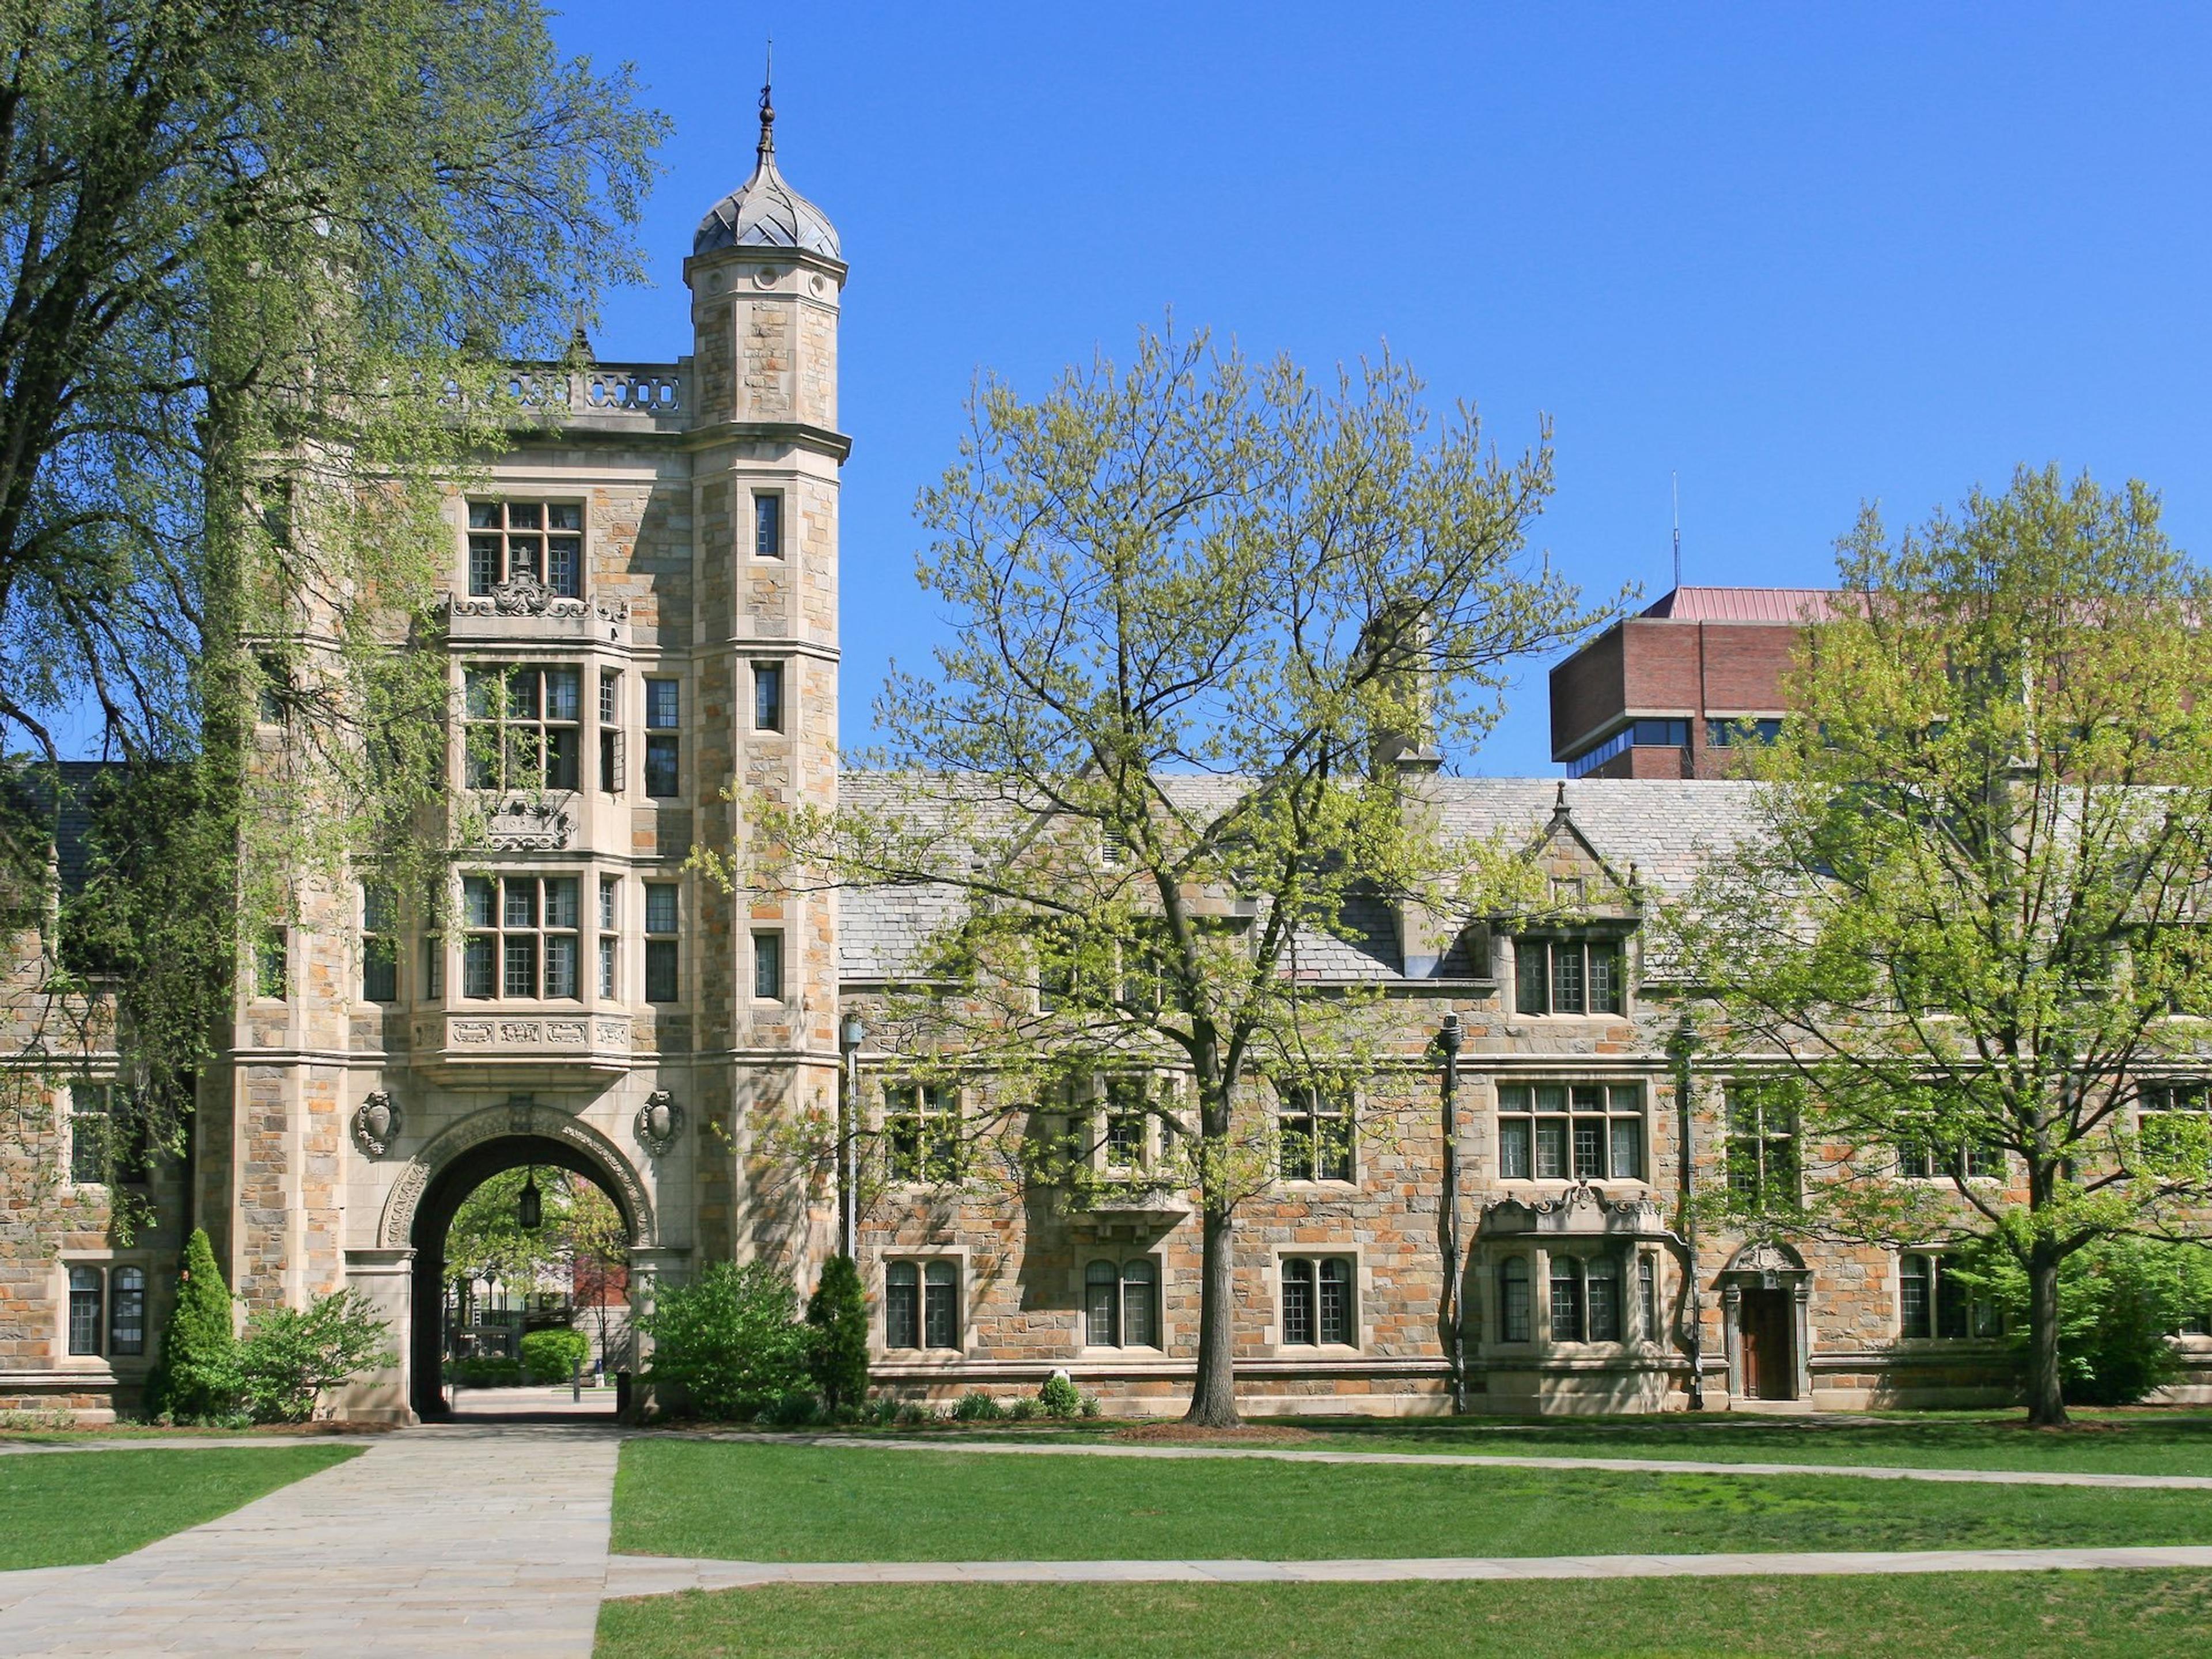 Michigan Ross  University of Michigan's Ross School of Business